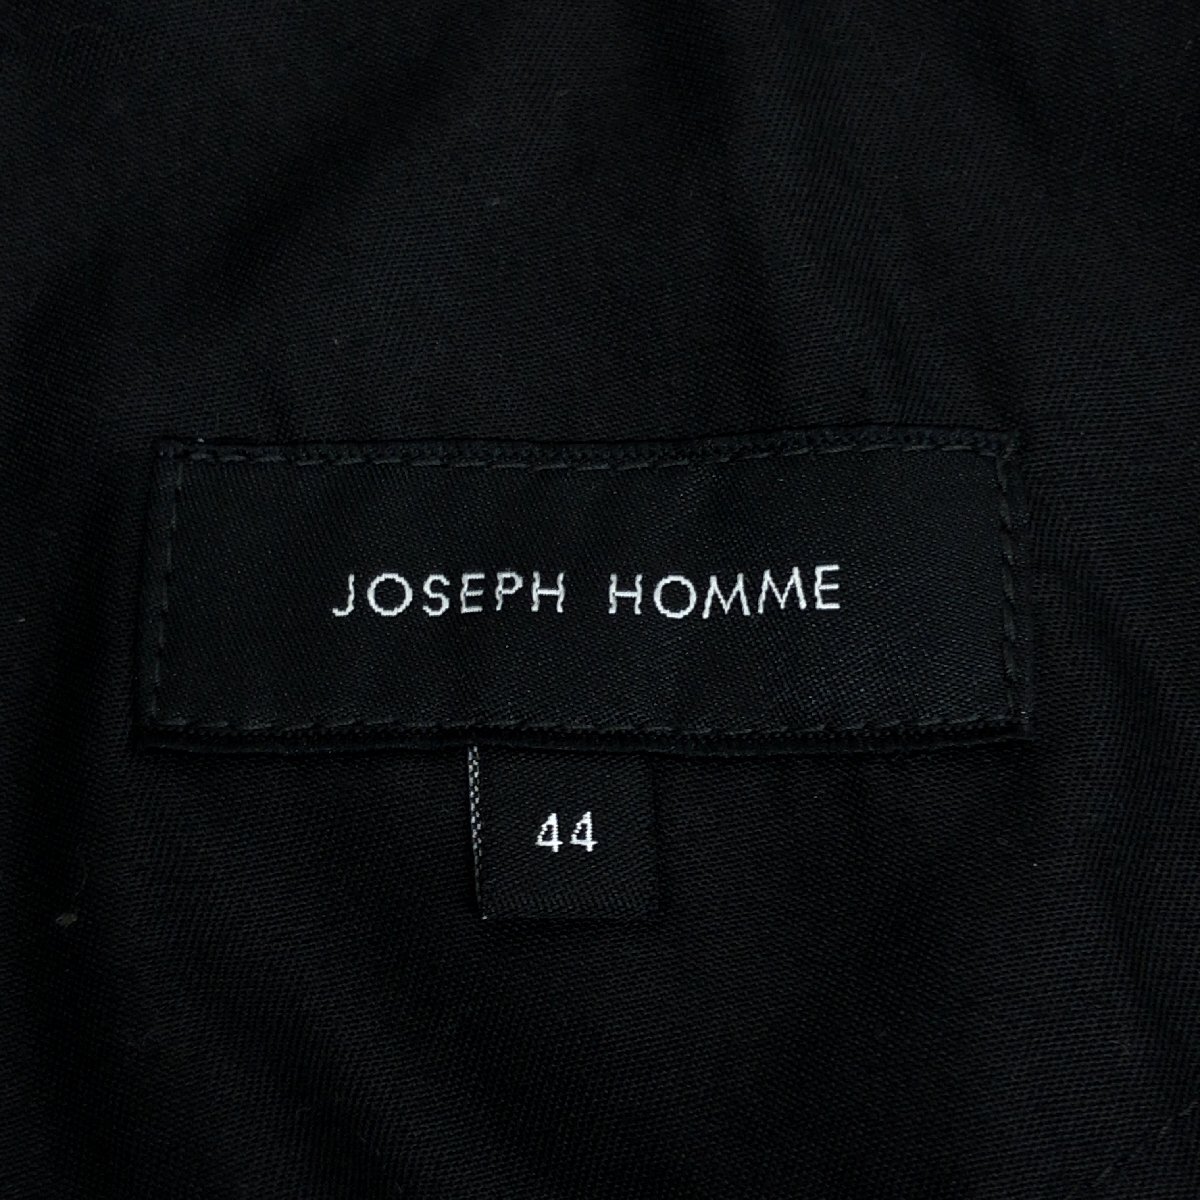 JOSEPH HOMME ジョゼフオム 吸水速乾 ドライ スラックス パンツ 44(S) 実寸w78 チャコールグレー 国内正規品 メンズ 紳士の画像3